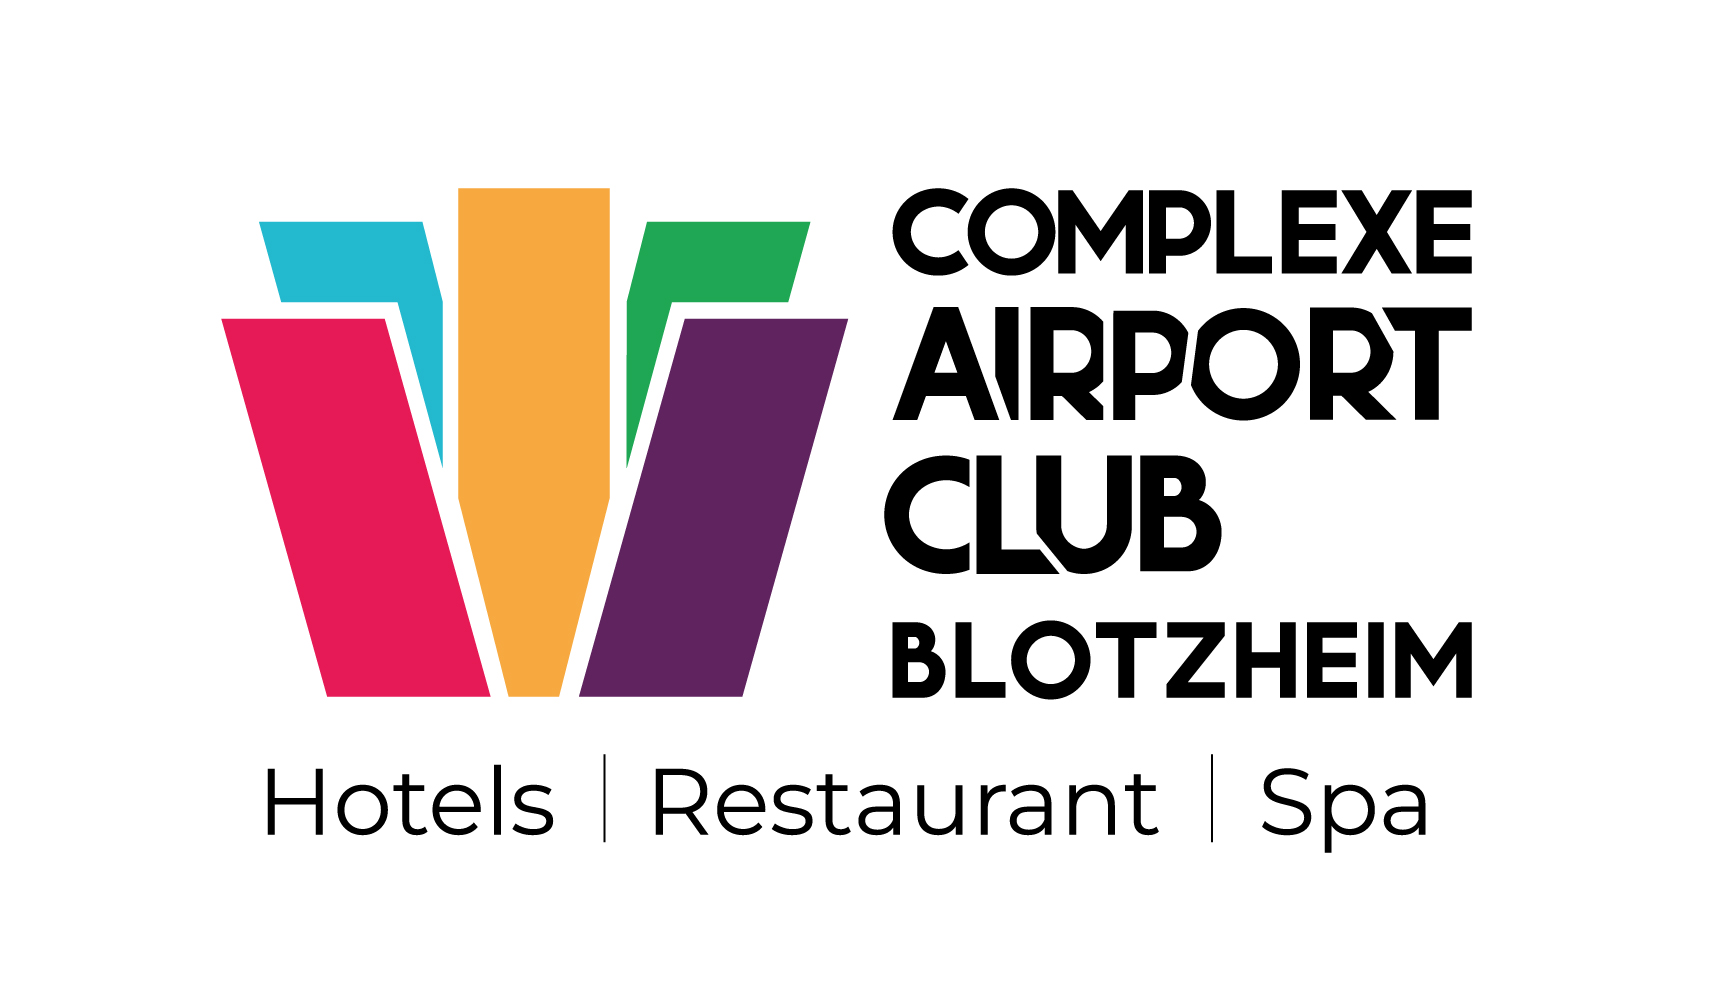 logo resort complexe airport club blotzheim rouge aparthotel adagio violet hotel mercure orange restaurant envol vert residence seniors caravelle bleu spa terres d'ailleurs